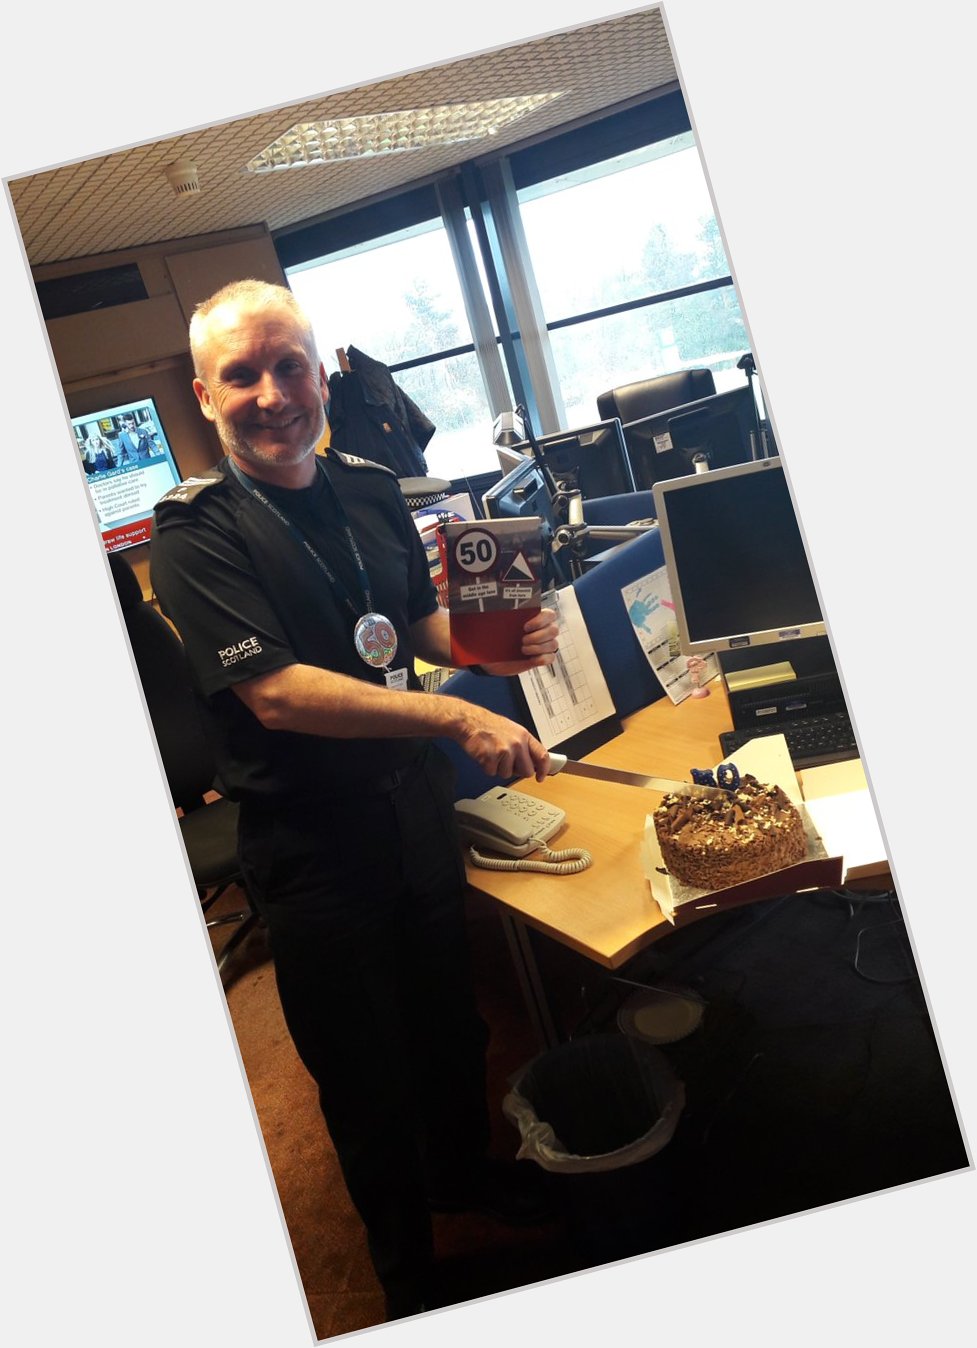 Sgt. Neil MacKenzie turns 50 tomorrow!!  Fife Division wishes him a happy birthday! 